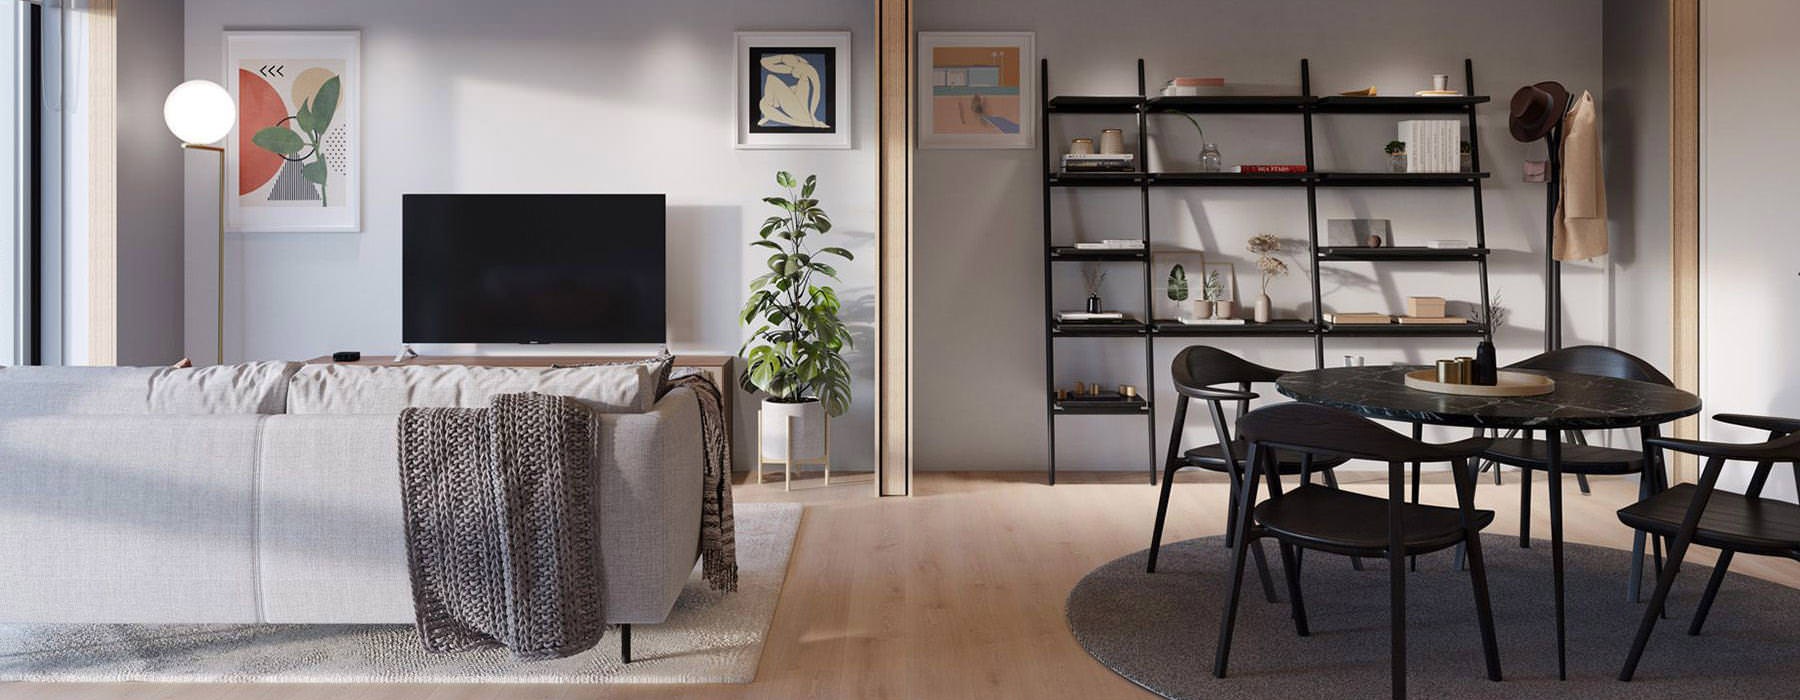 Living room rendering with wood-style flooring